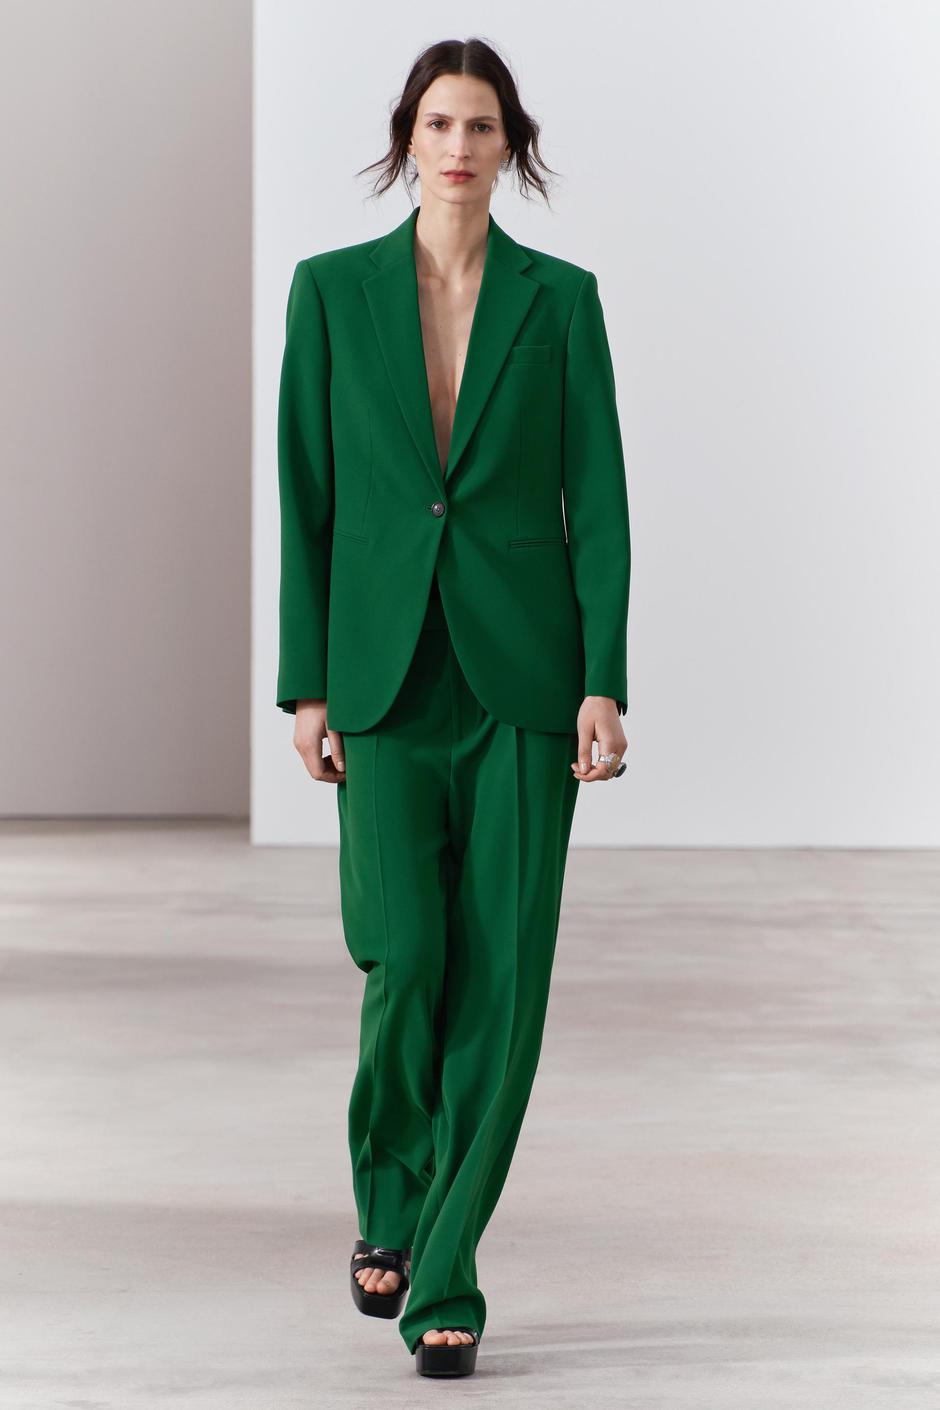 Foto: Zara, zeleno odijelo (sako 69,95 eura i hlače 39,95 eura) | Autor: Zara